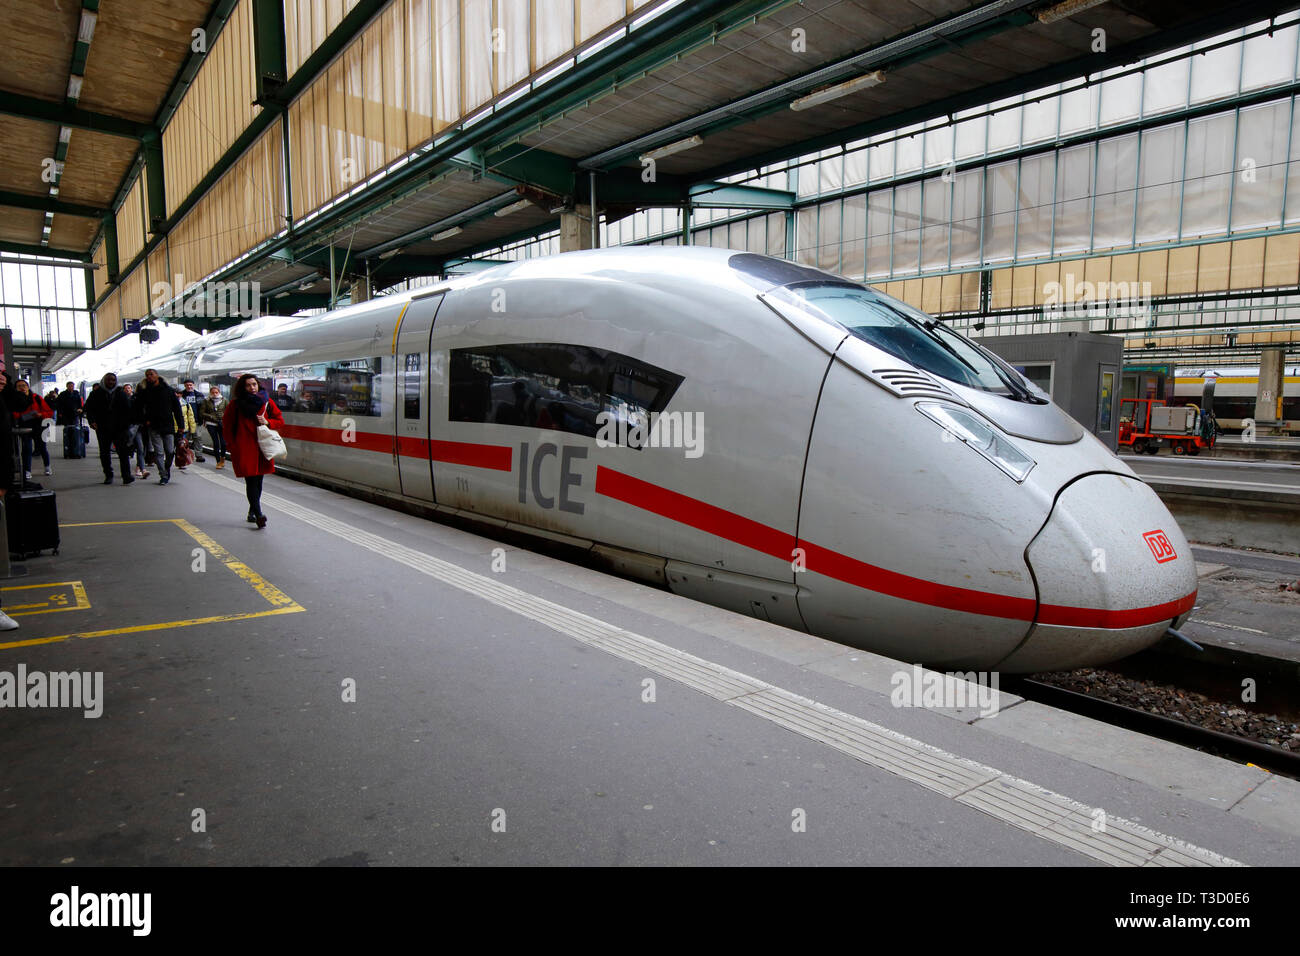 Un tren InterCity Express (ICE) en Stuttgart Hbf, Stuttgart, Alemania. Stuttgart Hauptbahnhof Foto de stock